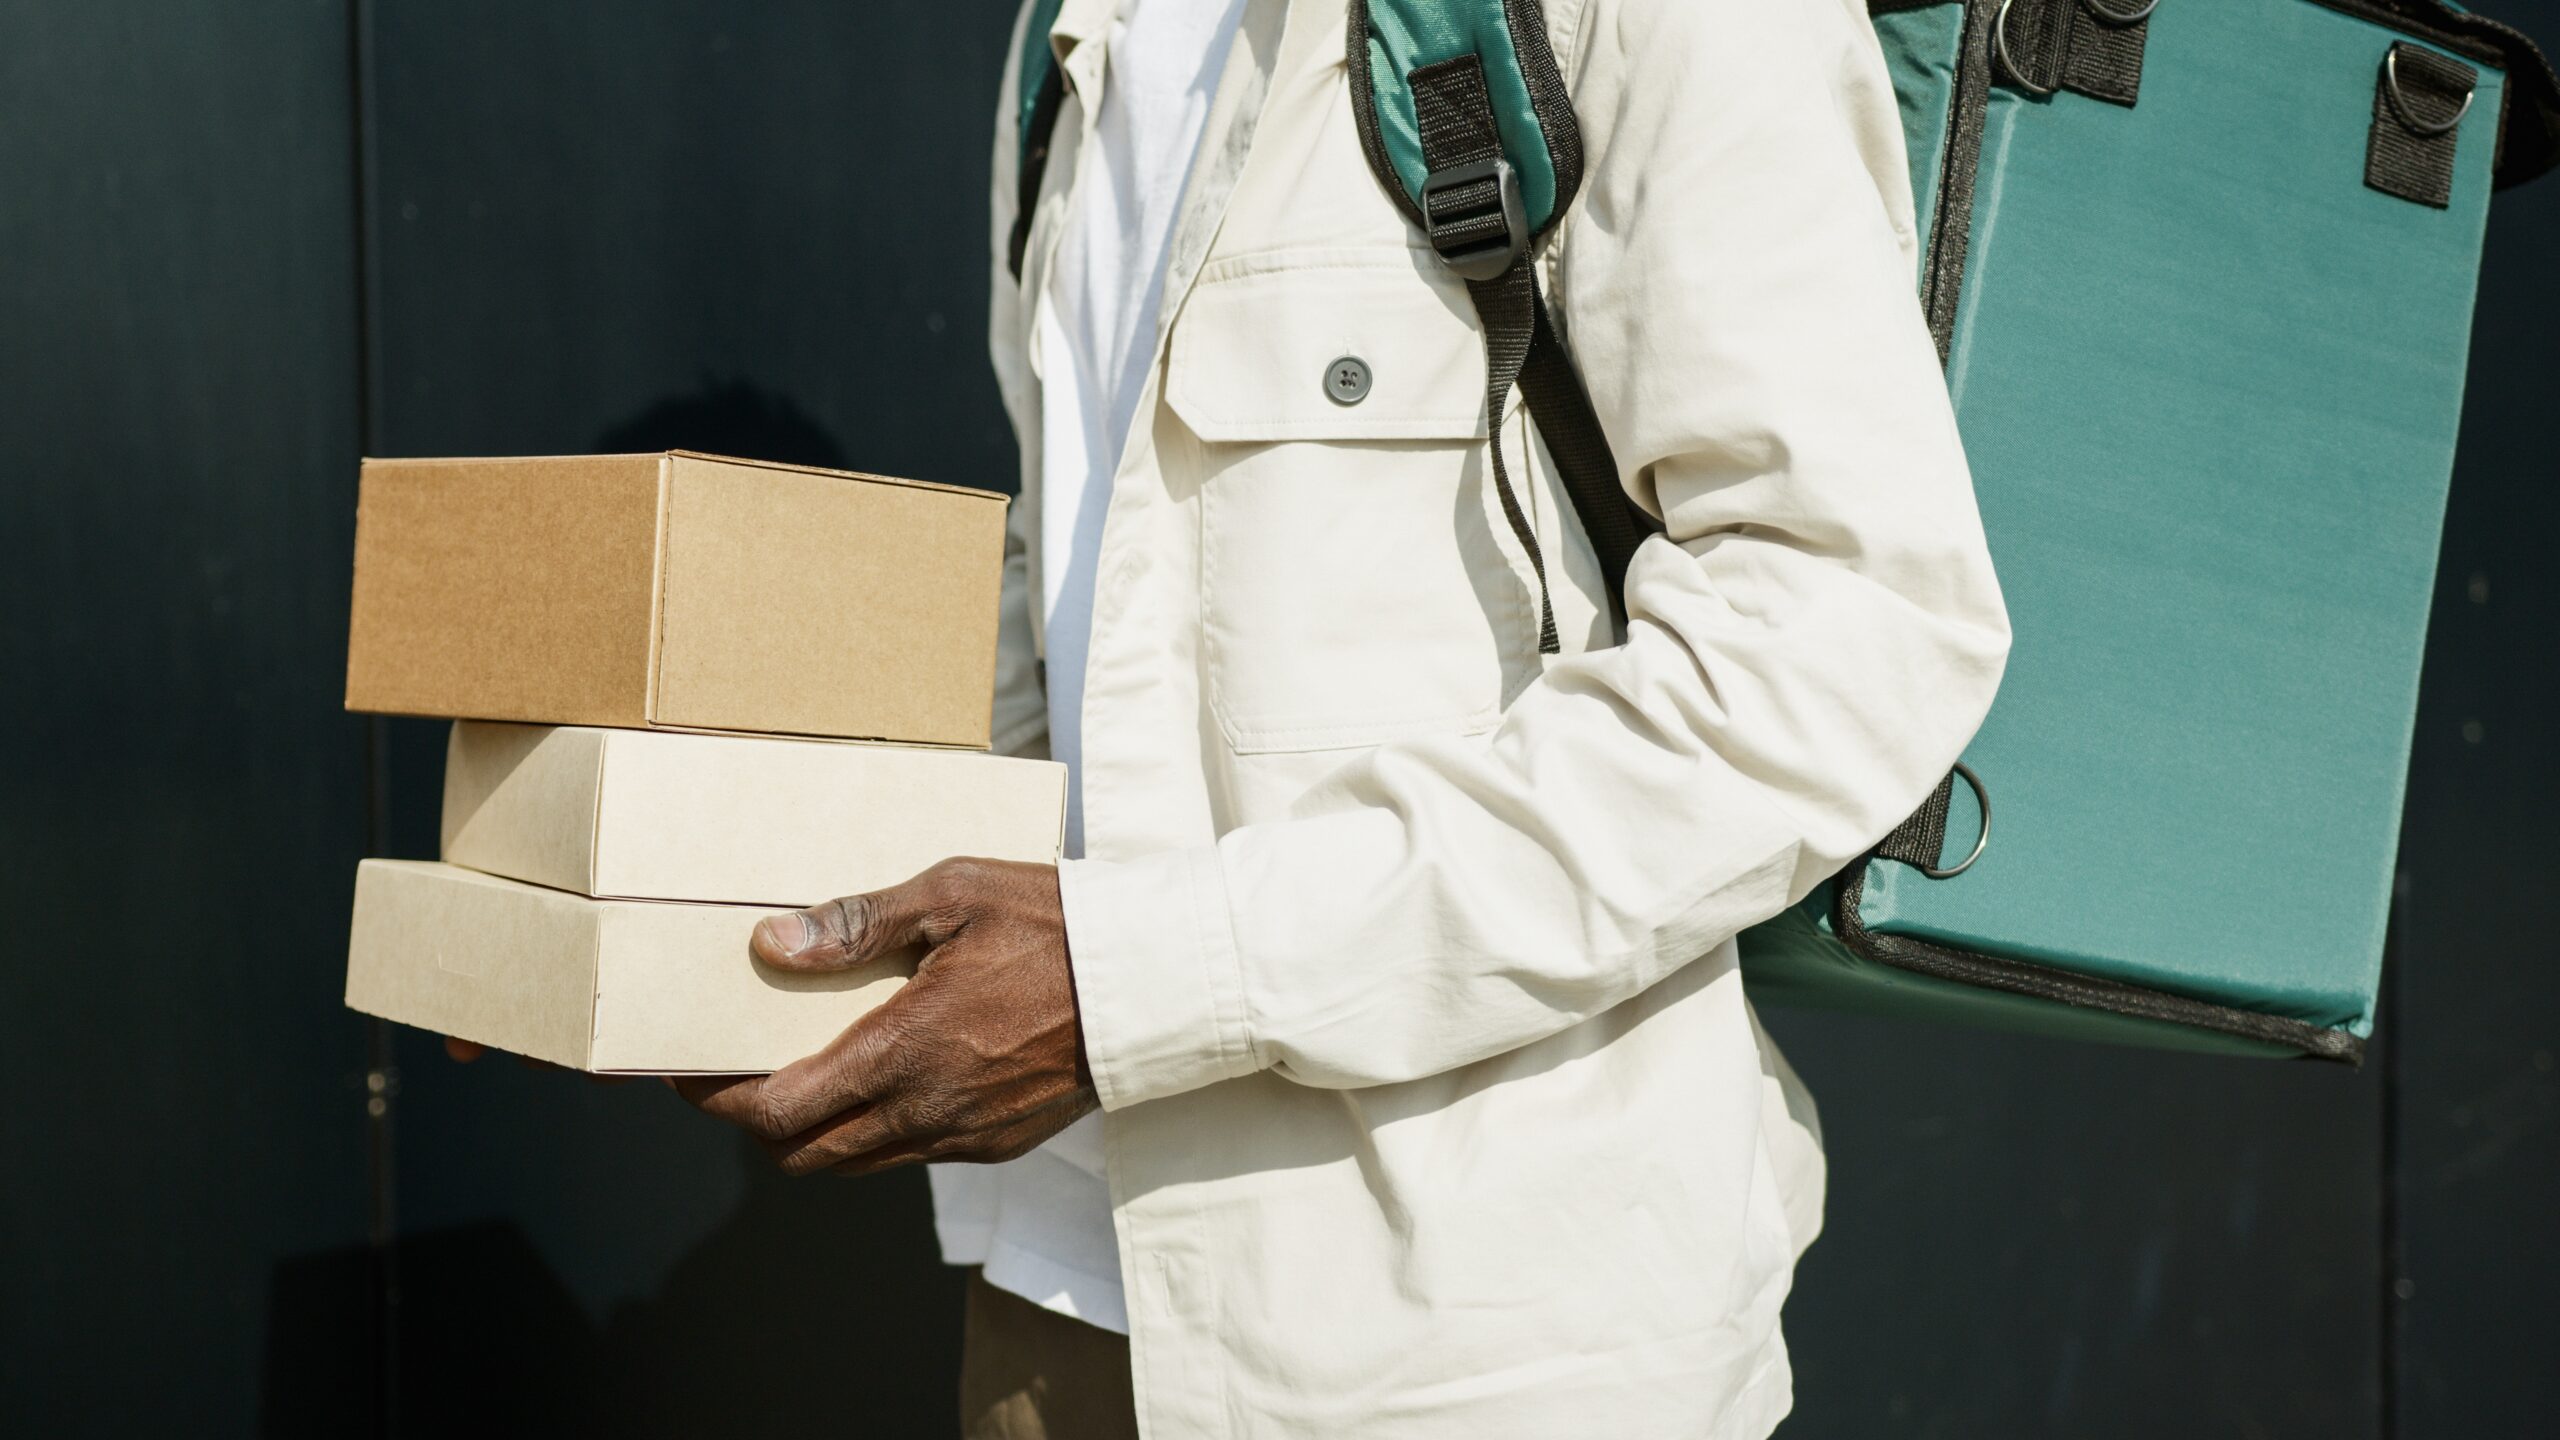 Entregador carregando diferentes pacotes, utilizando bolsa de entrega nas costas.